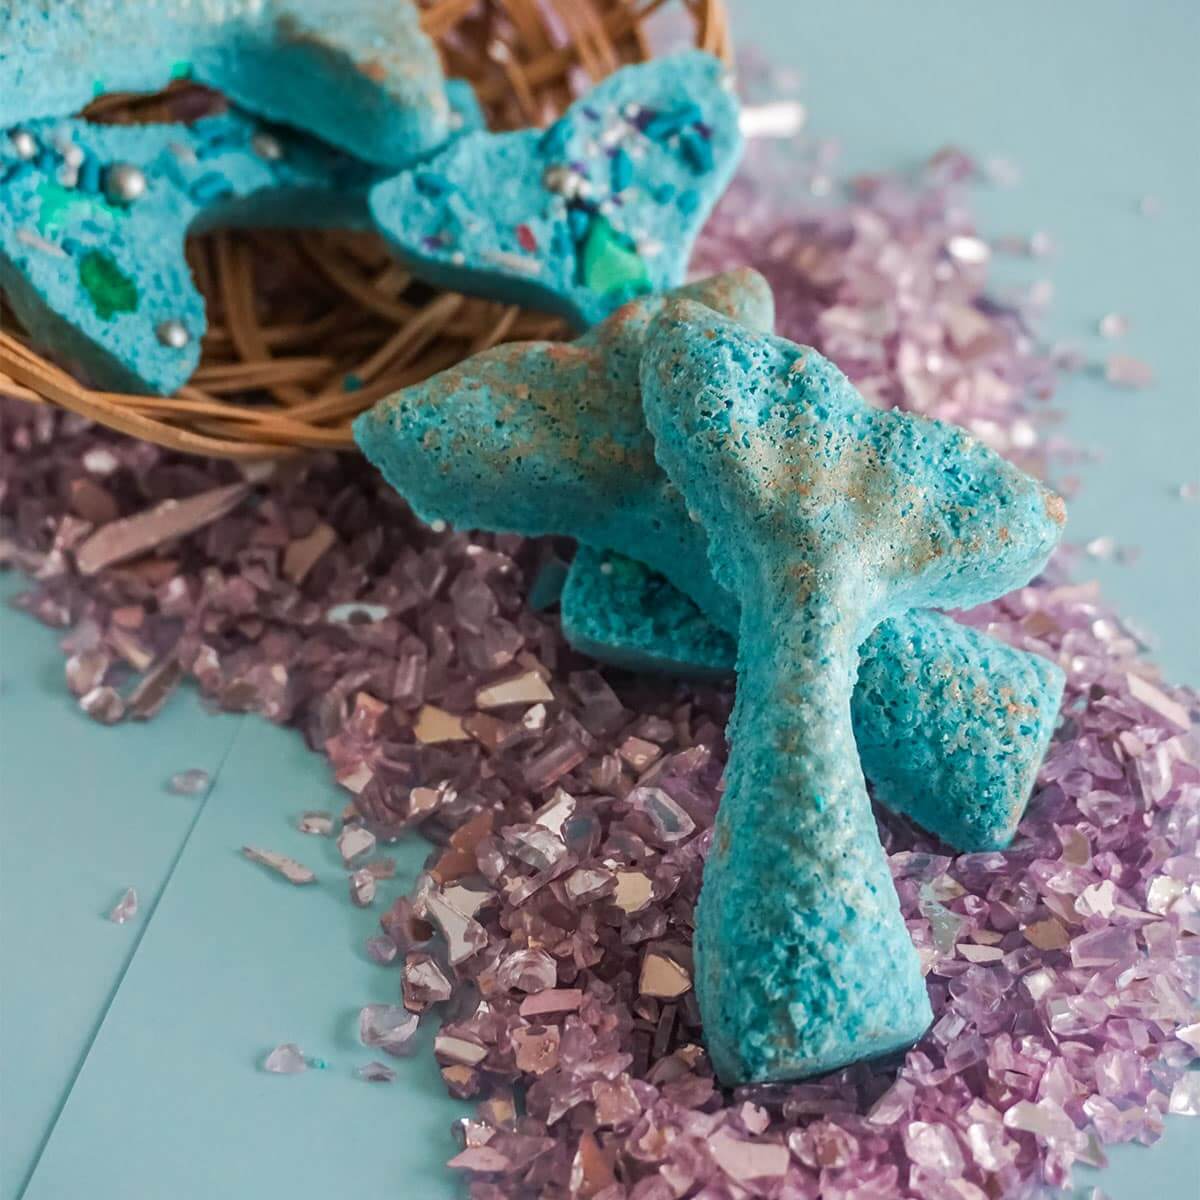 DIY Mermaid Bath Bombs Tail Craft Idea With Amazing FragranceMermaid Bath Bomb Craft Ideas